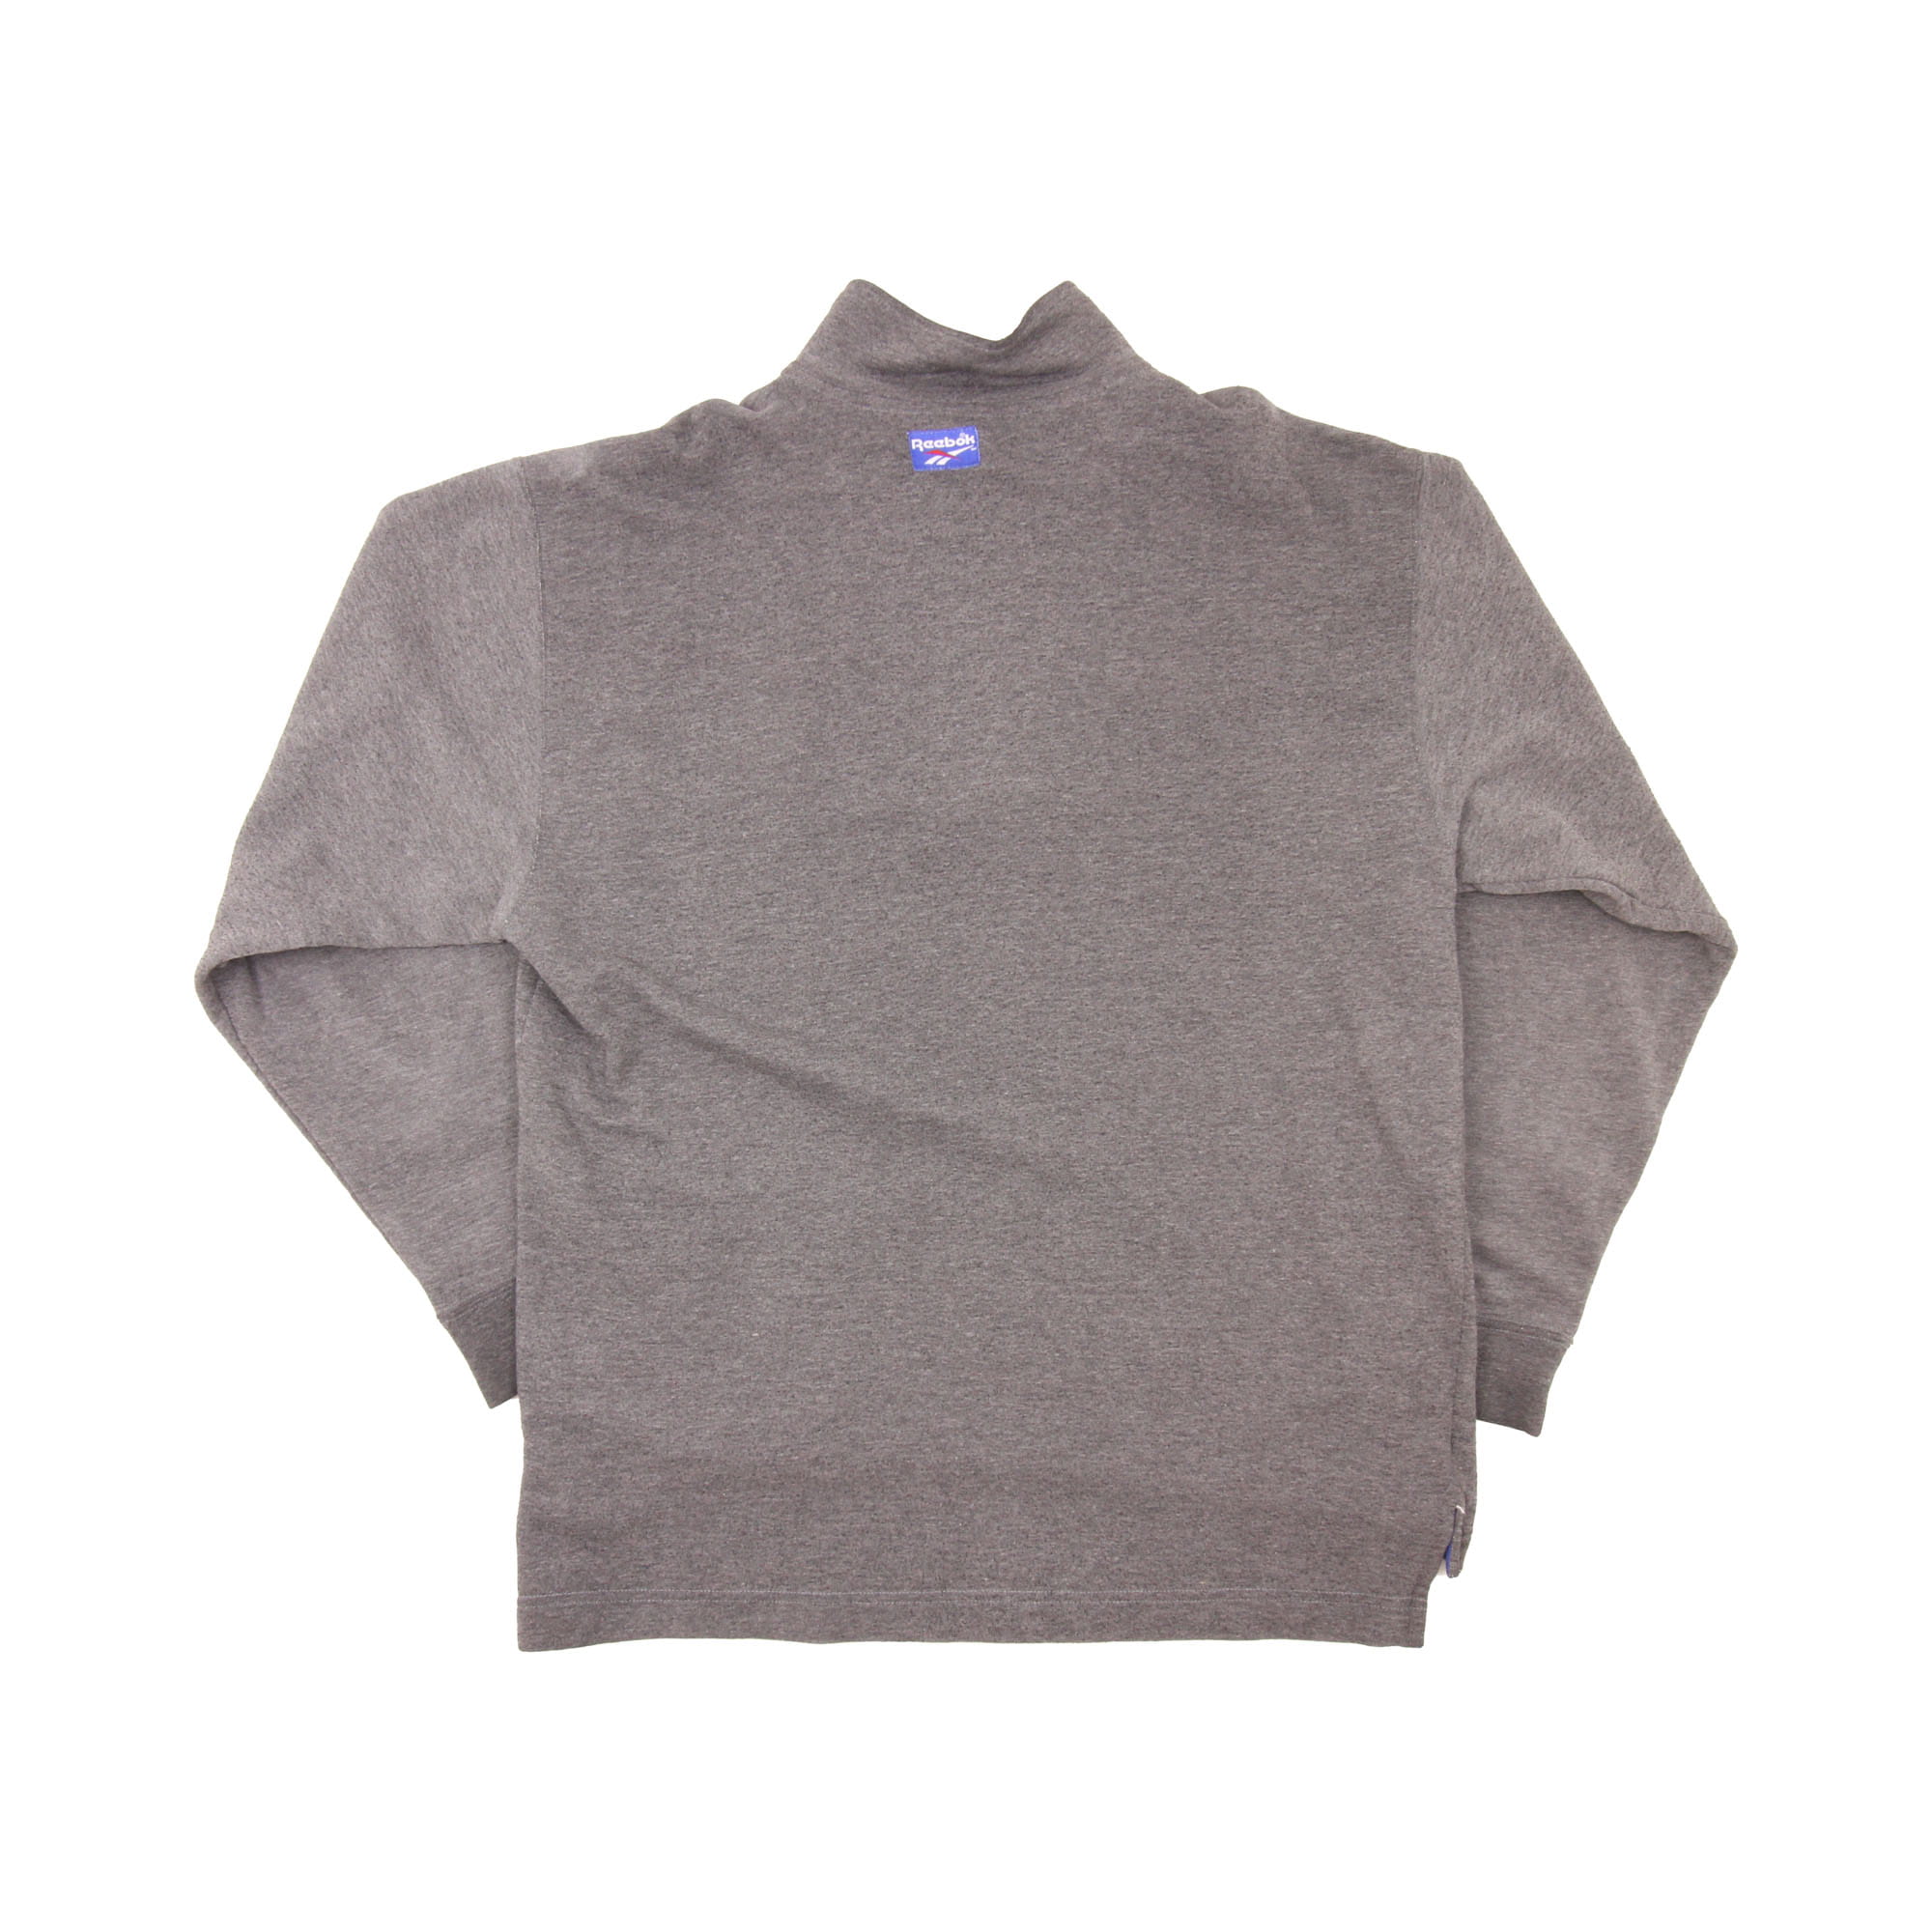 Reebok Vintage Sweatshirt Grey -  XL